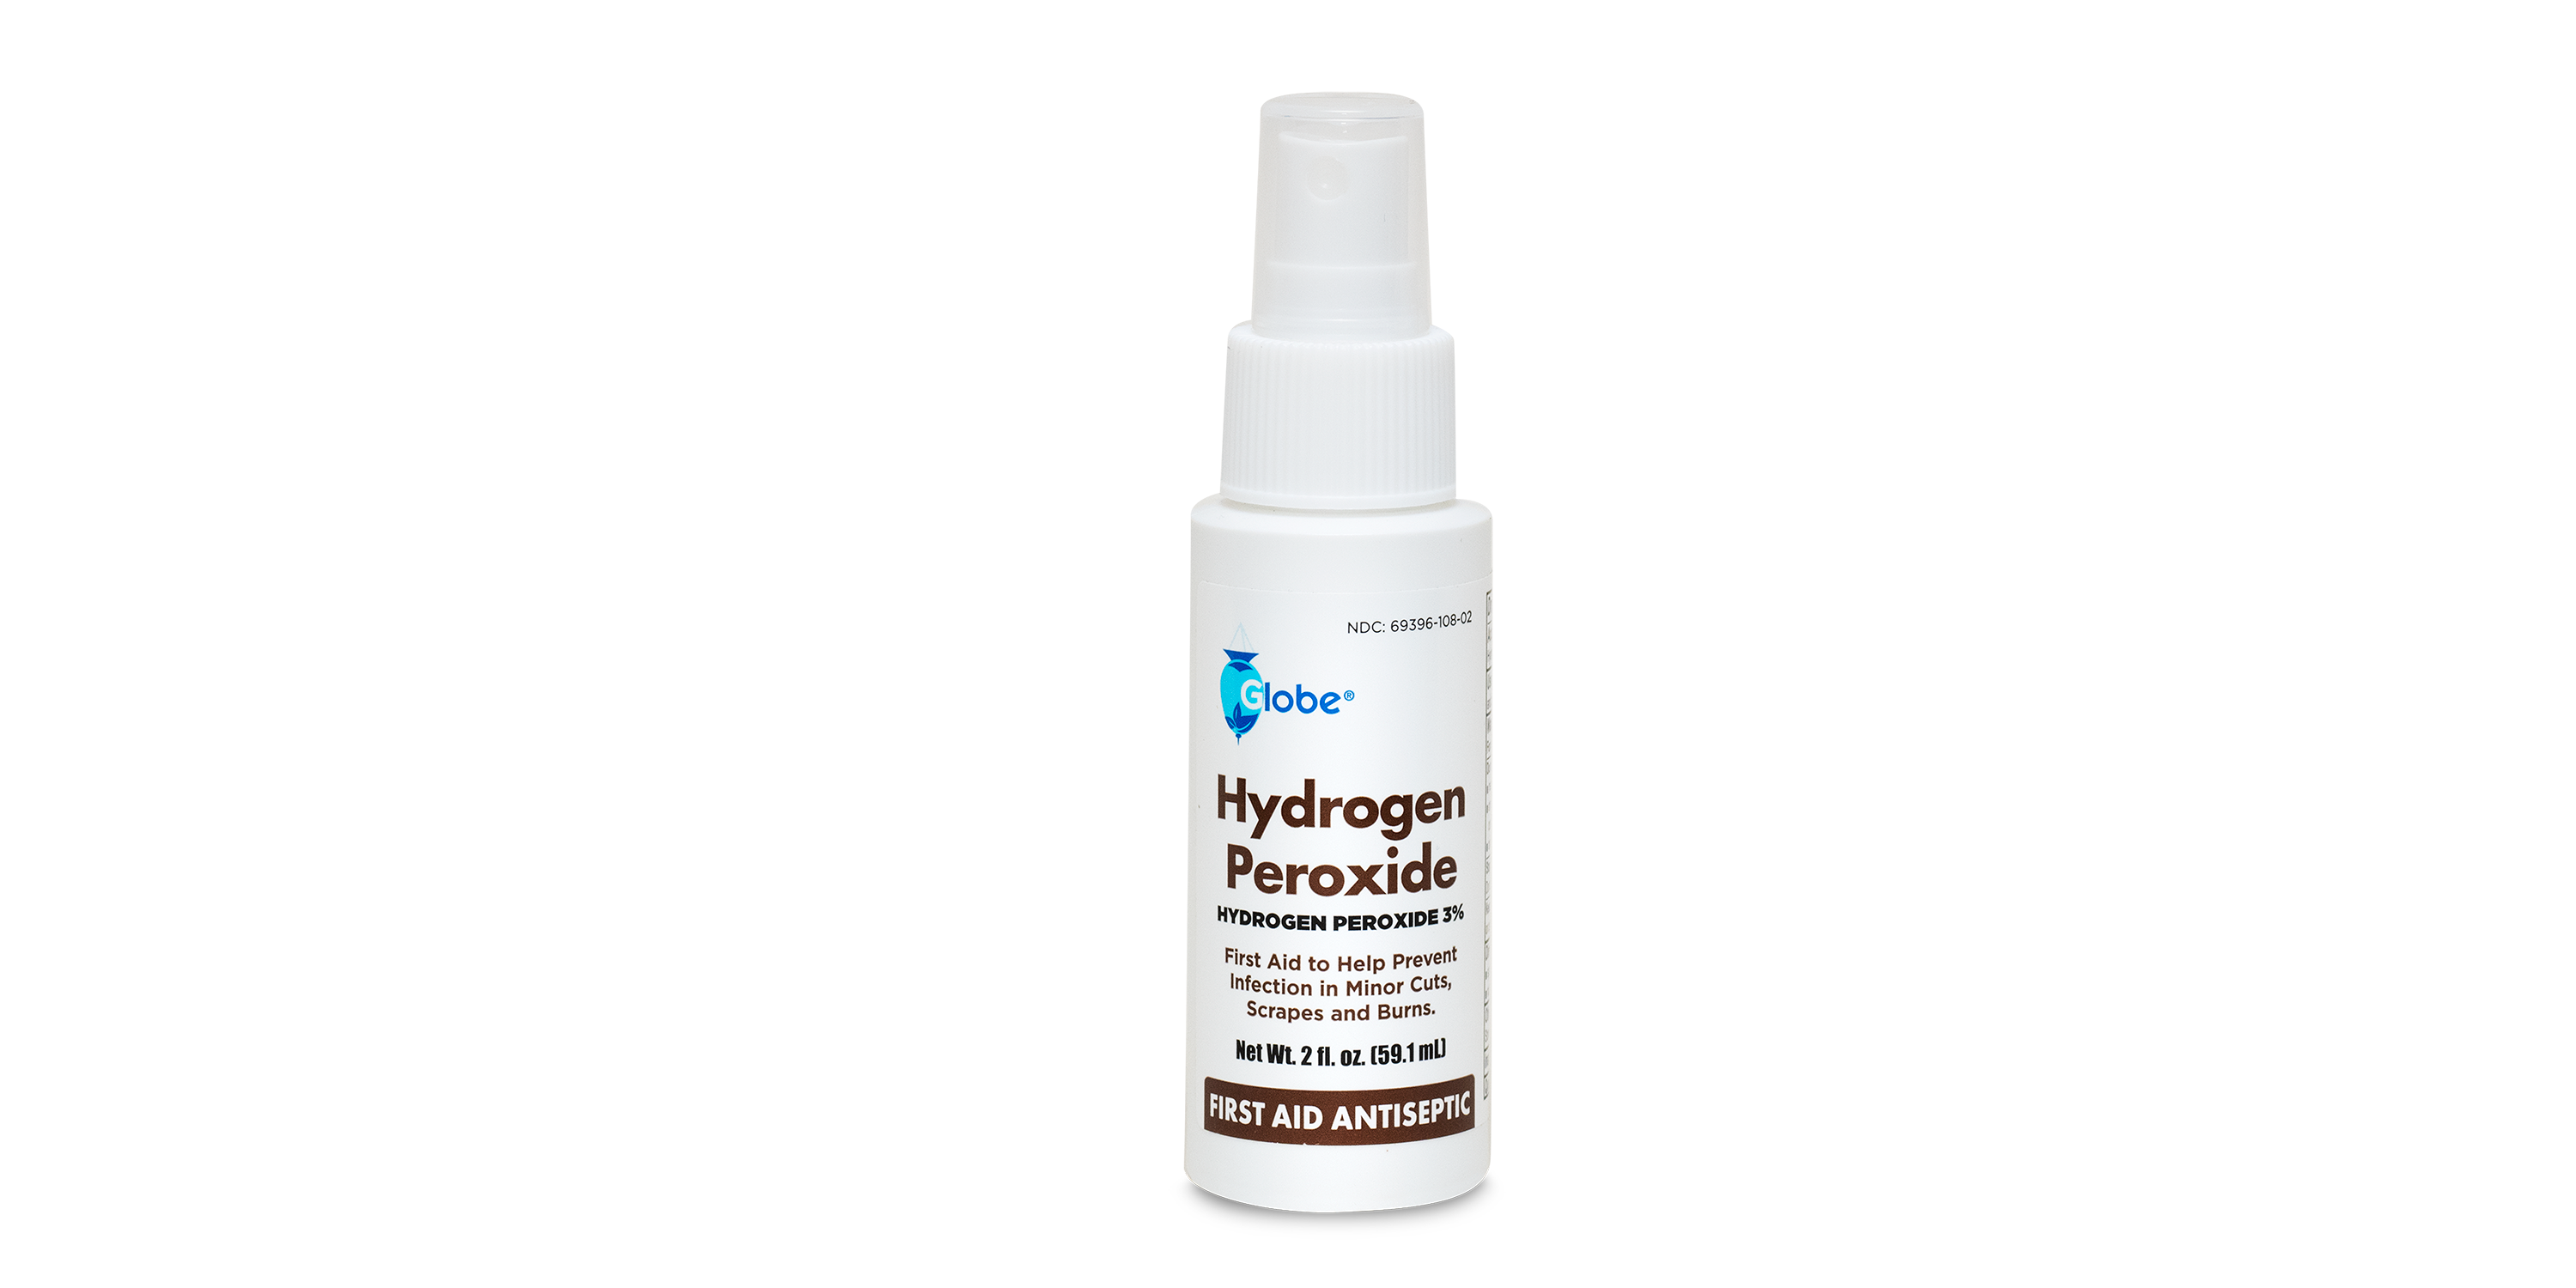 Globe Hydrogen Peroxide 3% First Aid Antiseptic Topical Solution USP Spray Bottle, 2 Fl. Oz Convenient Pump Spray Bottle 972